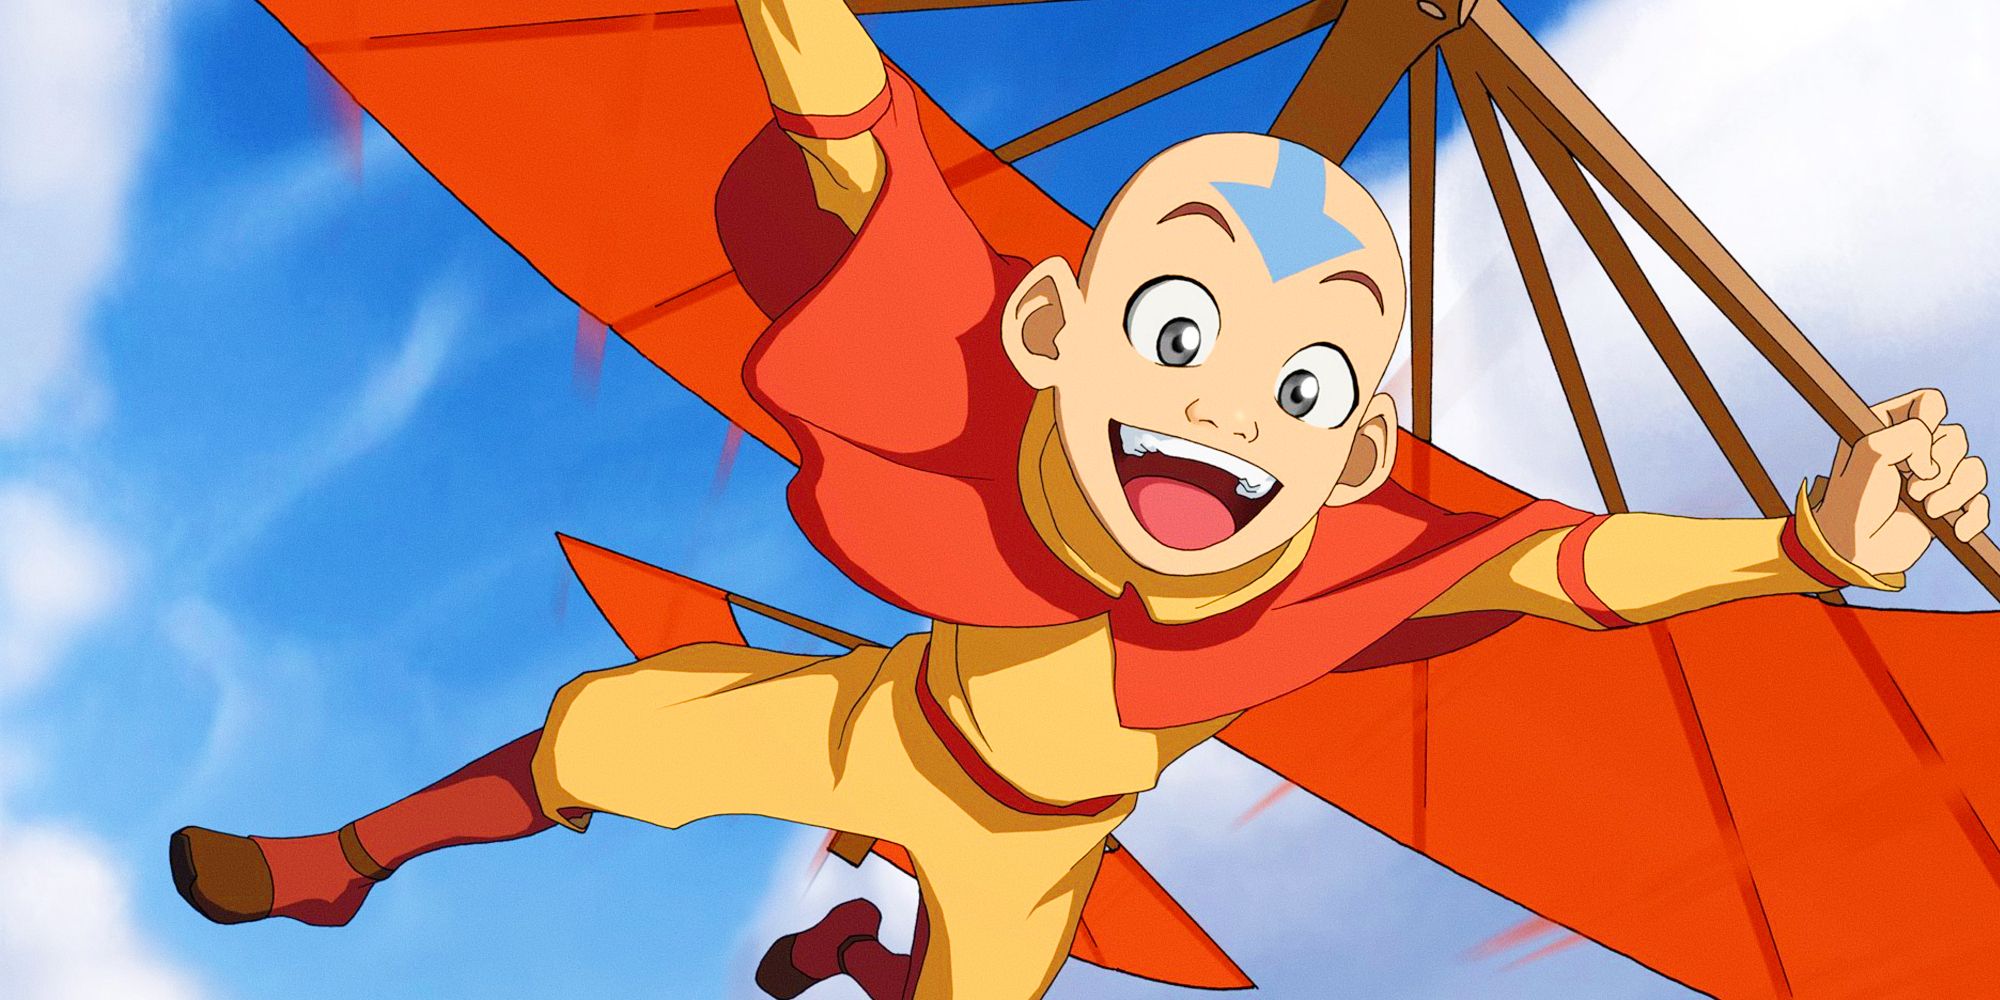 Aang flying avatar the last airbender